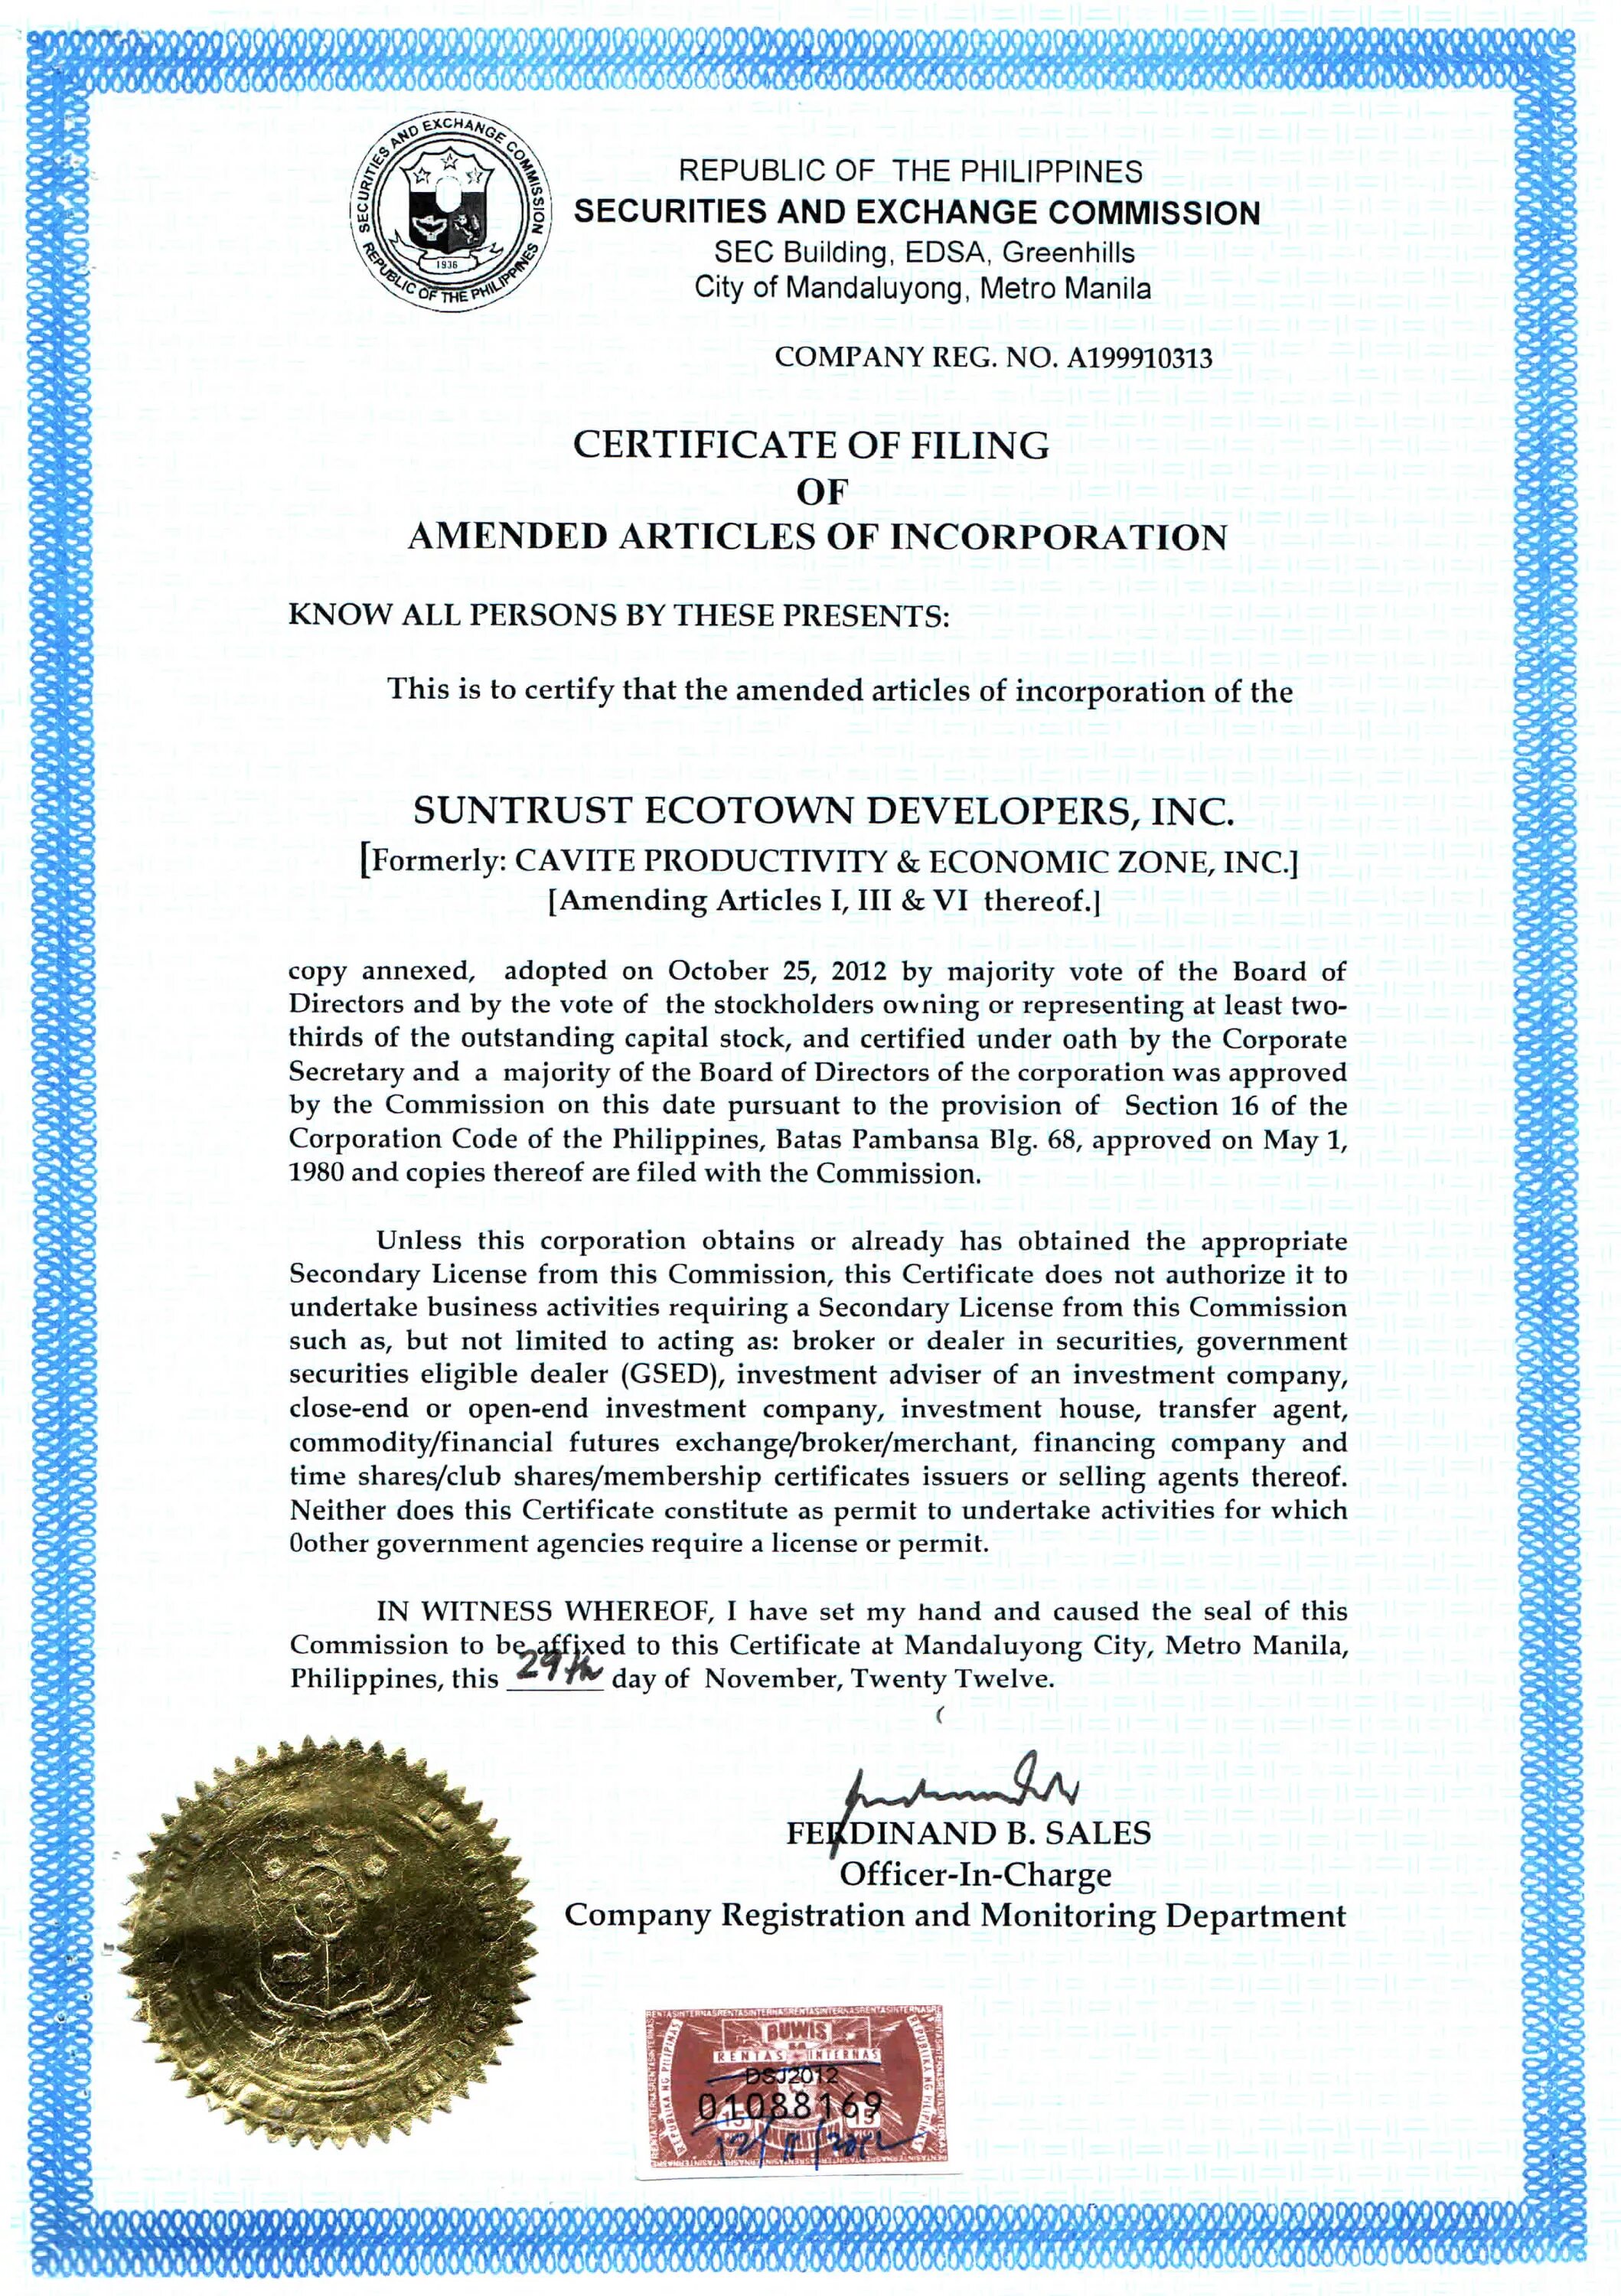 Certificate of Residence Gon. Что такое Certificate of Filing off. Sec certificate